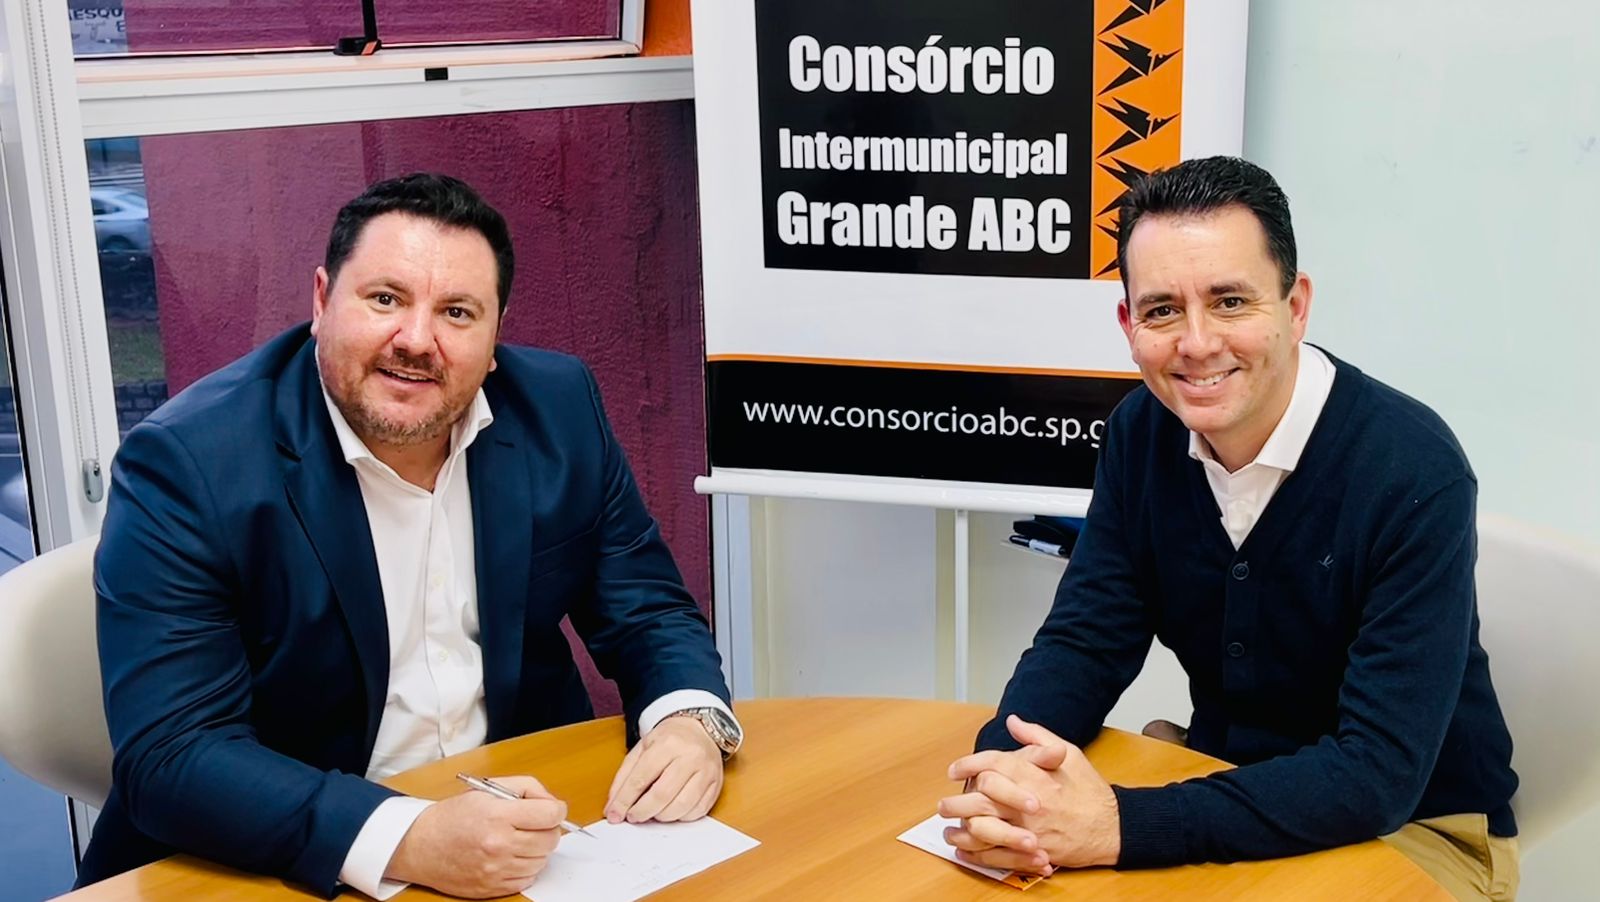 Consórcio Intermunicipal Grande ABC, Santo André SP